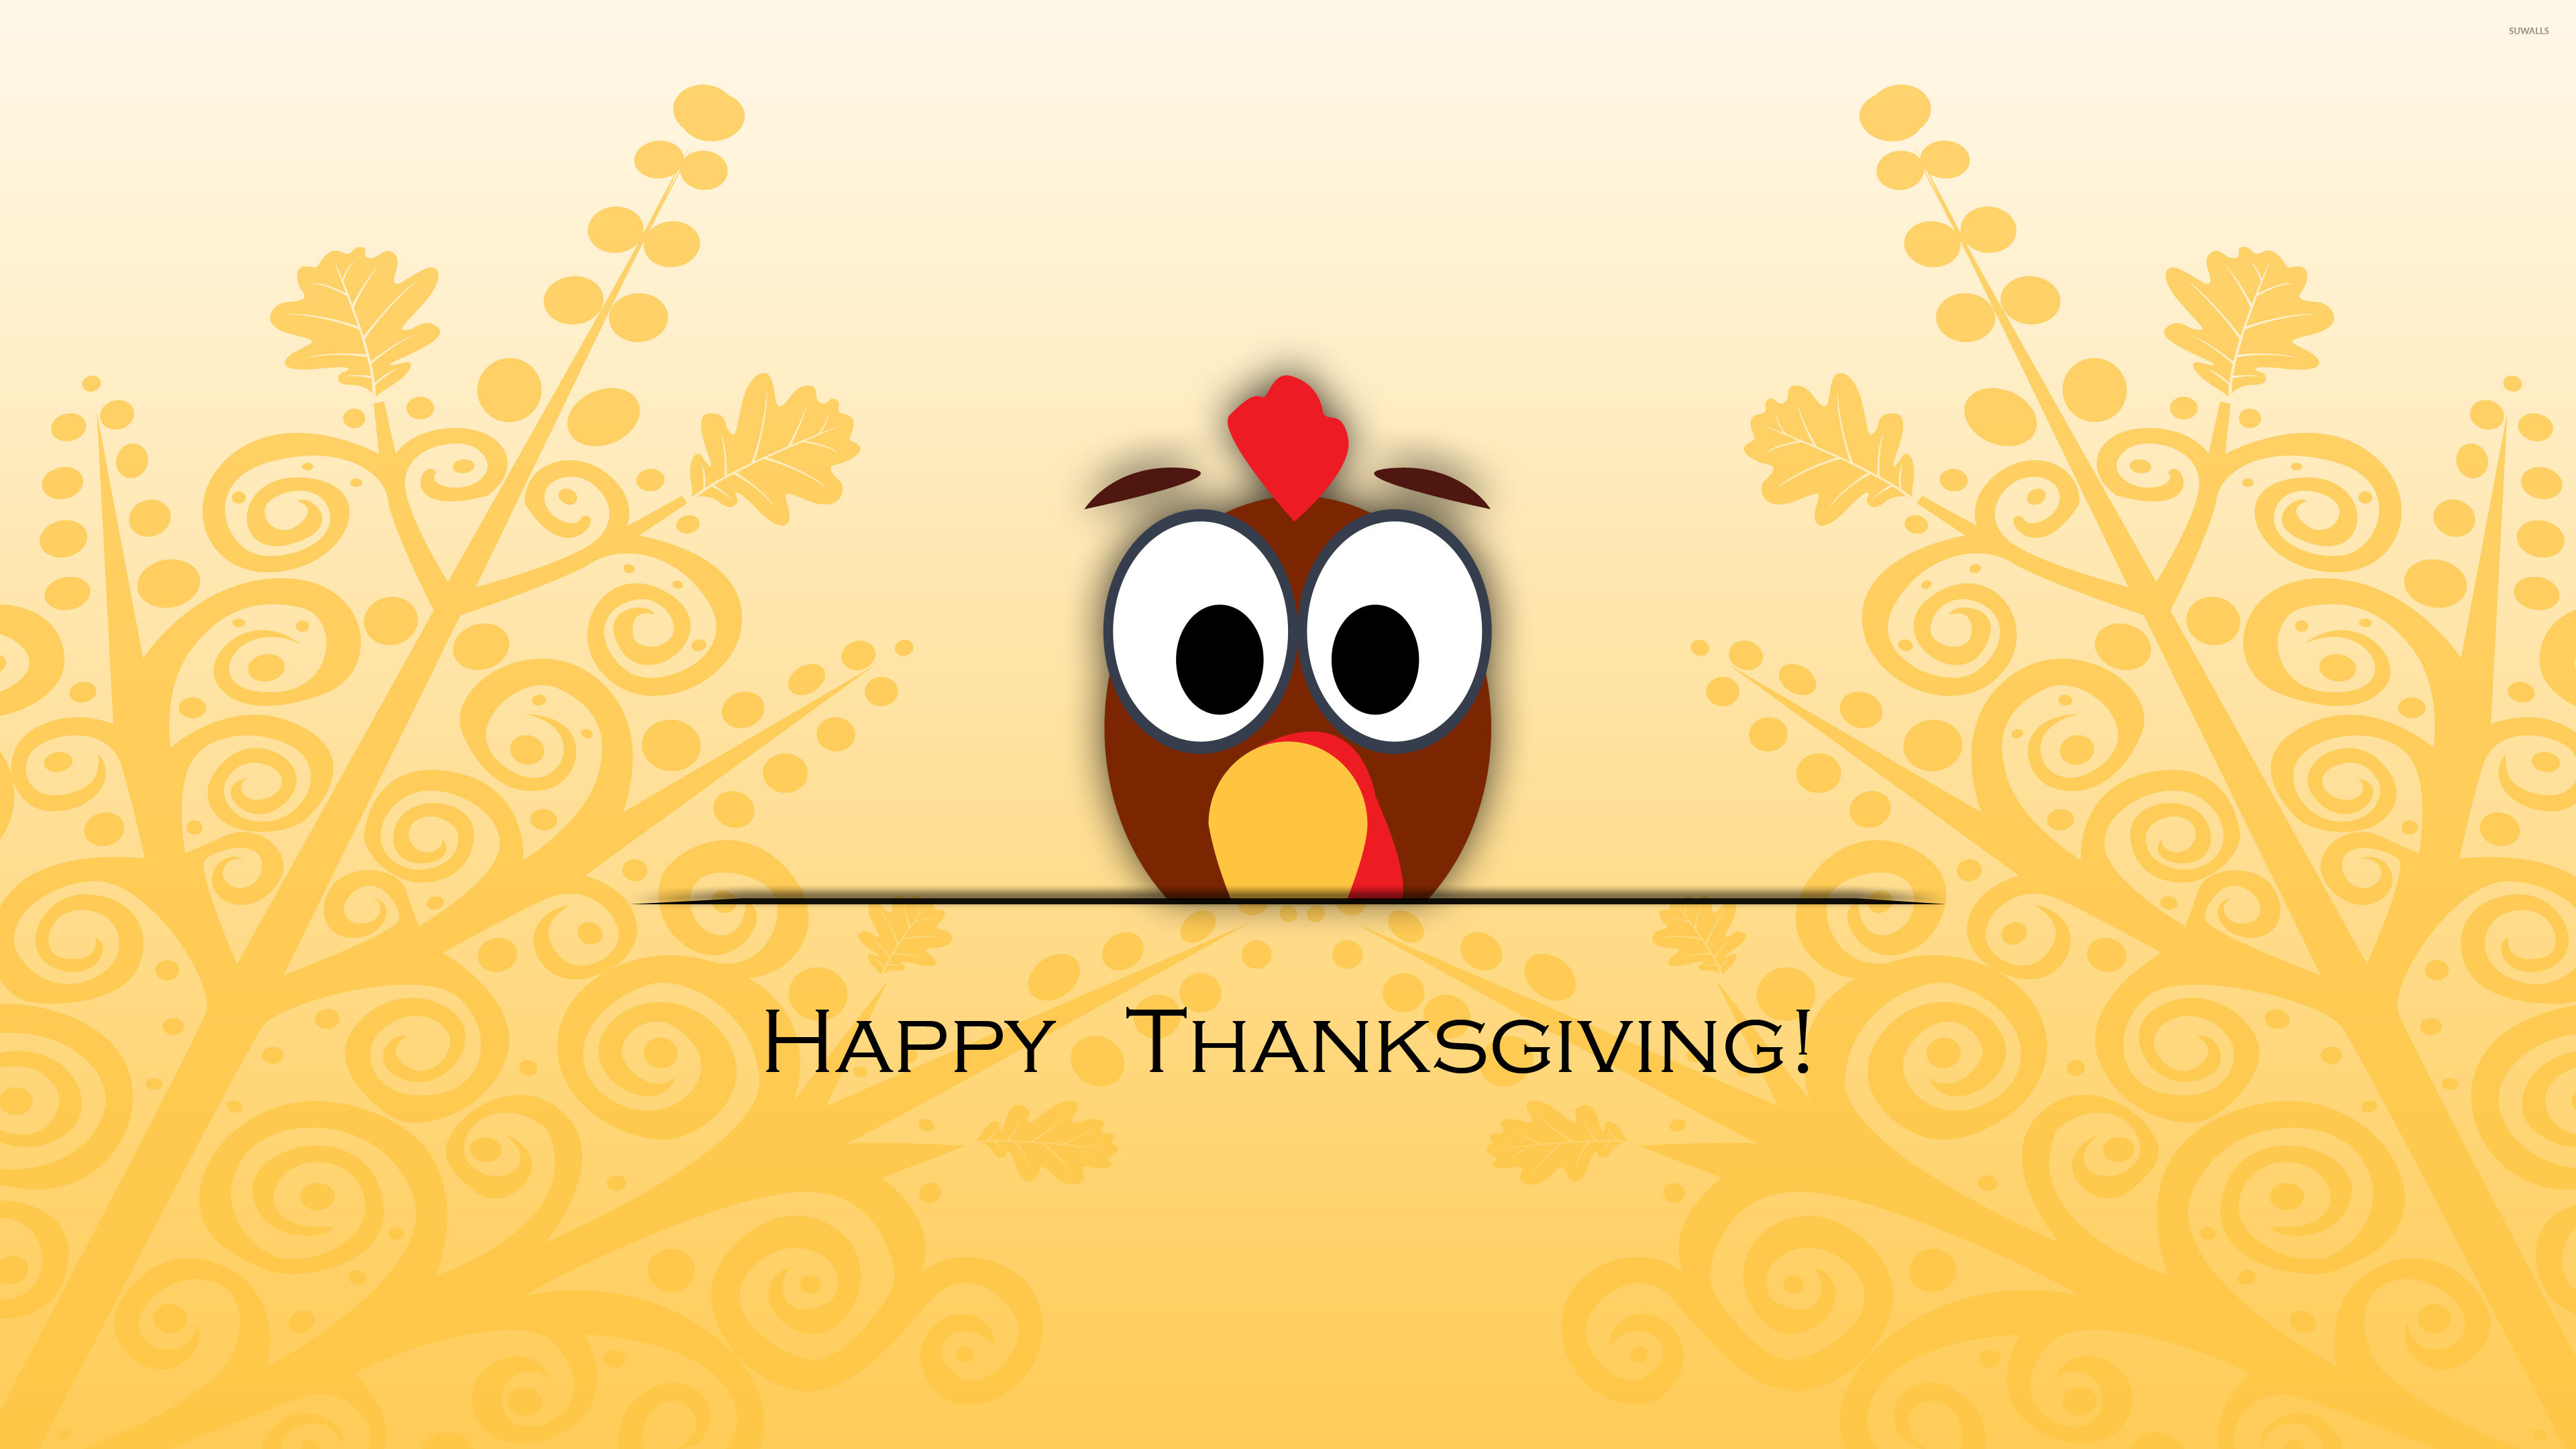 38200 Thanksgiving Turkey Stock Photos Pictures  RoyaltyFree Images   iStock  Thanksgiving Turkey Roast turkey